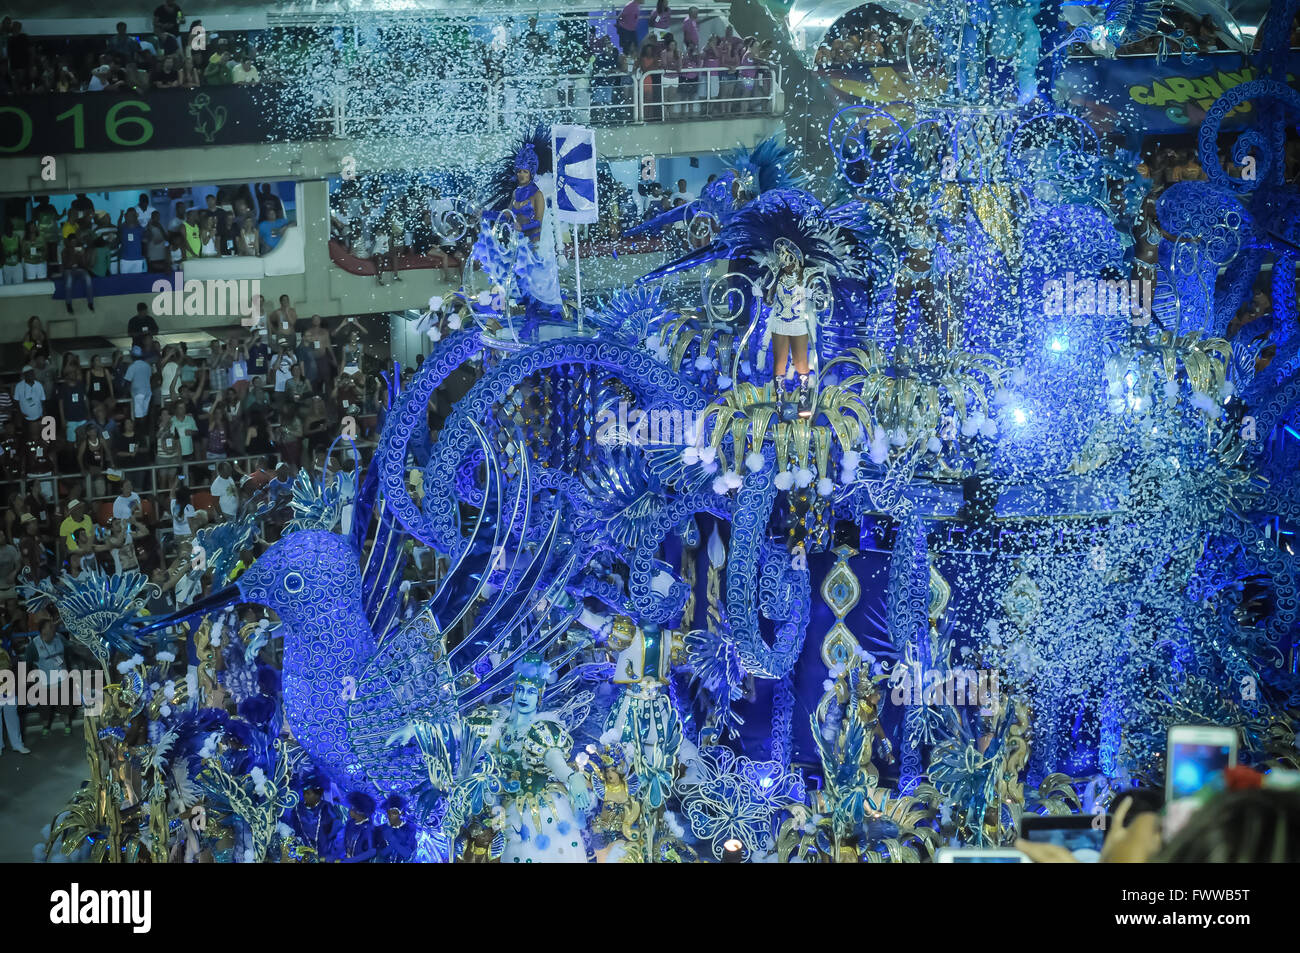 Beija-Flor samba school parading at Rio Carnival 2016 Stock Photo